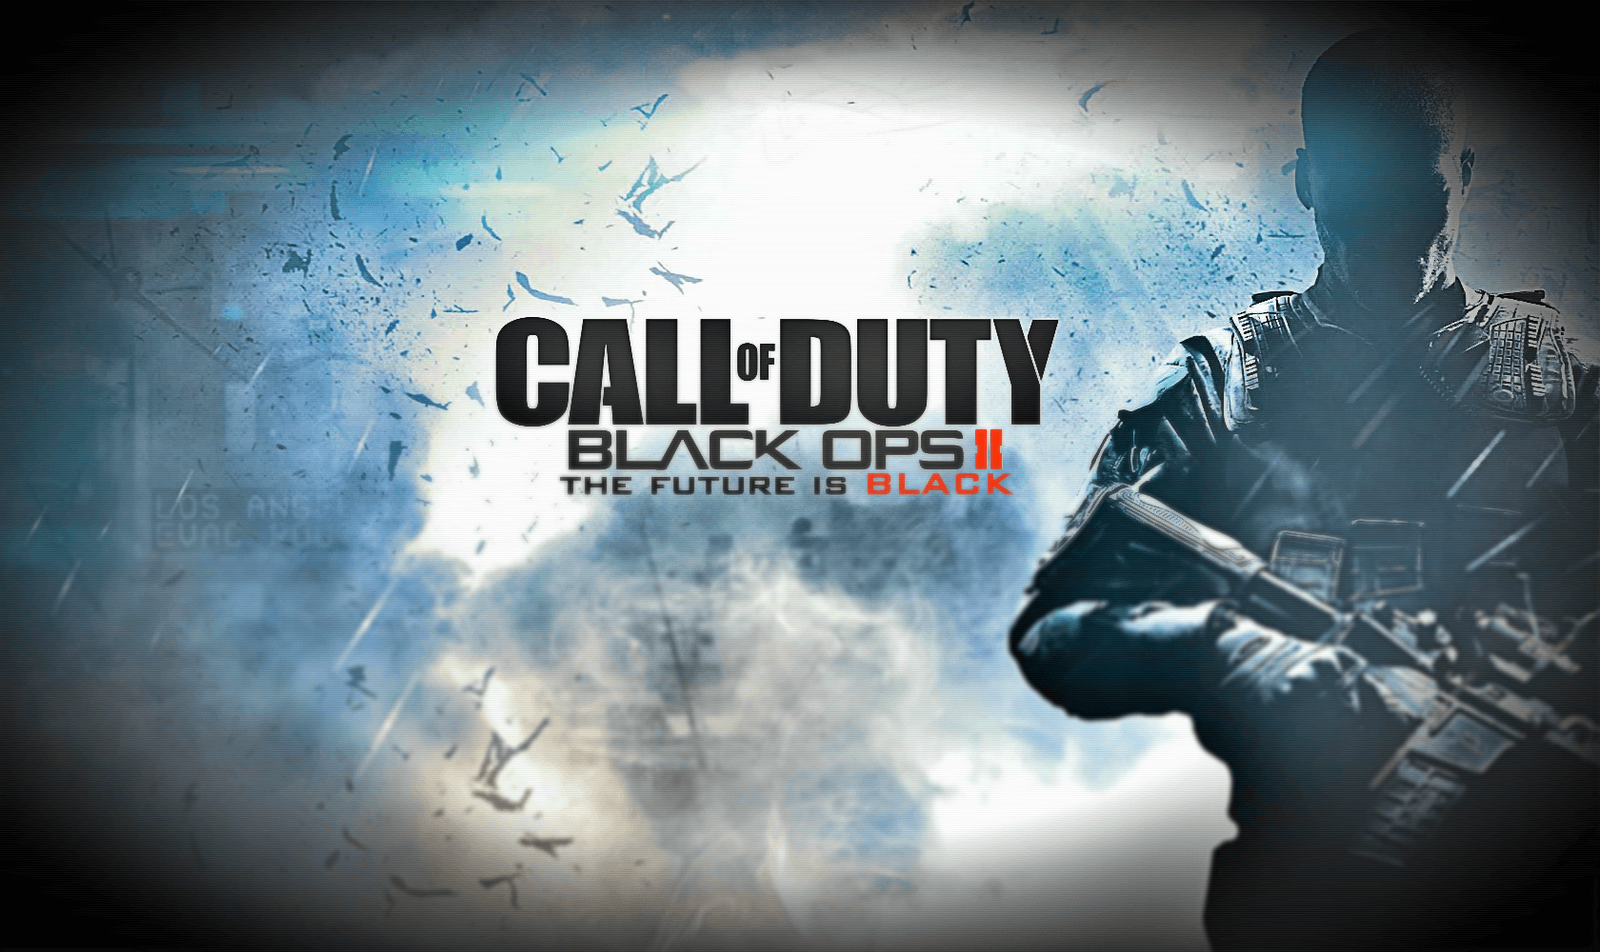 HD WALLPAPERS: Call of Duty Black ops 2 HD Wallpaper. Call of duty black, Call duty black ops, Call of duty